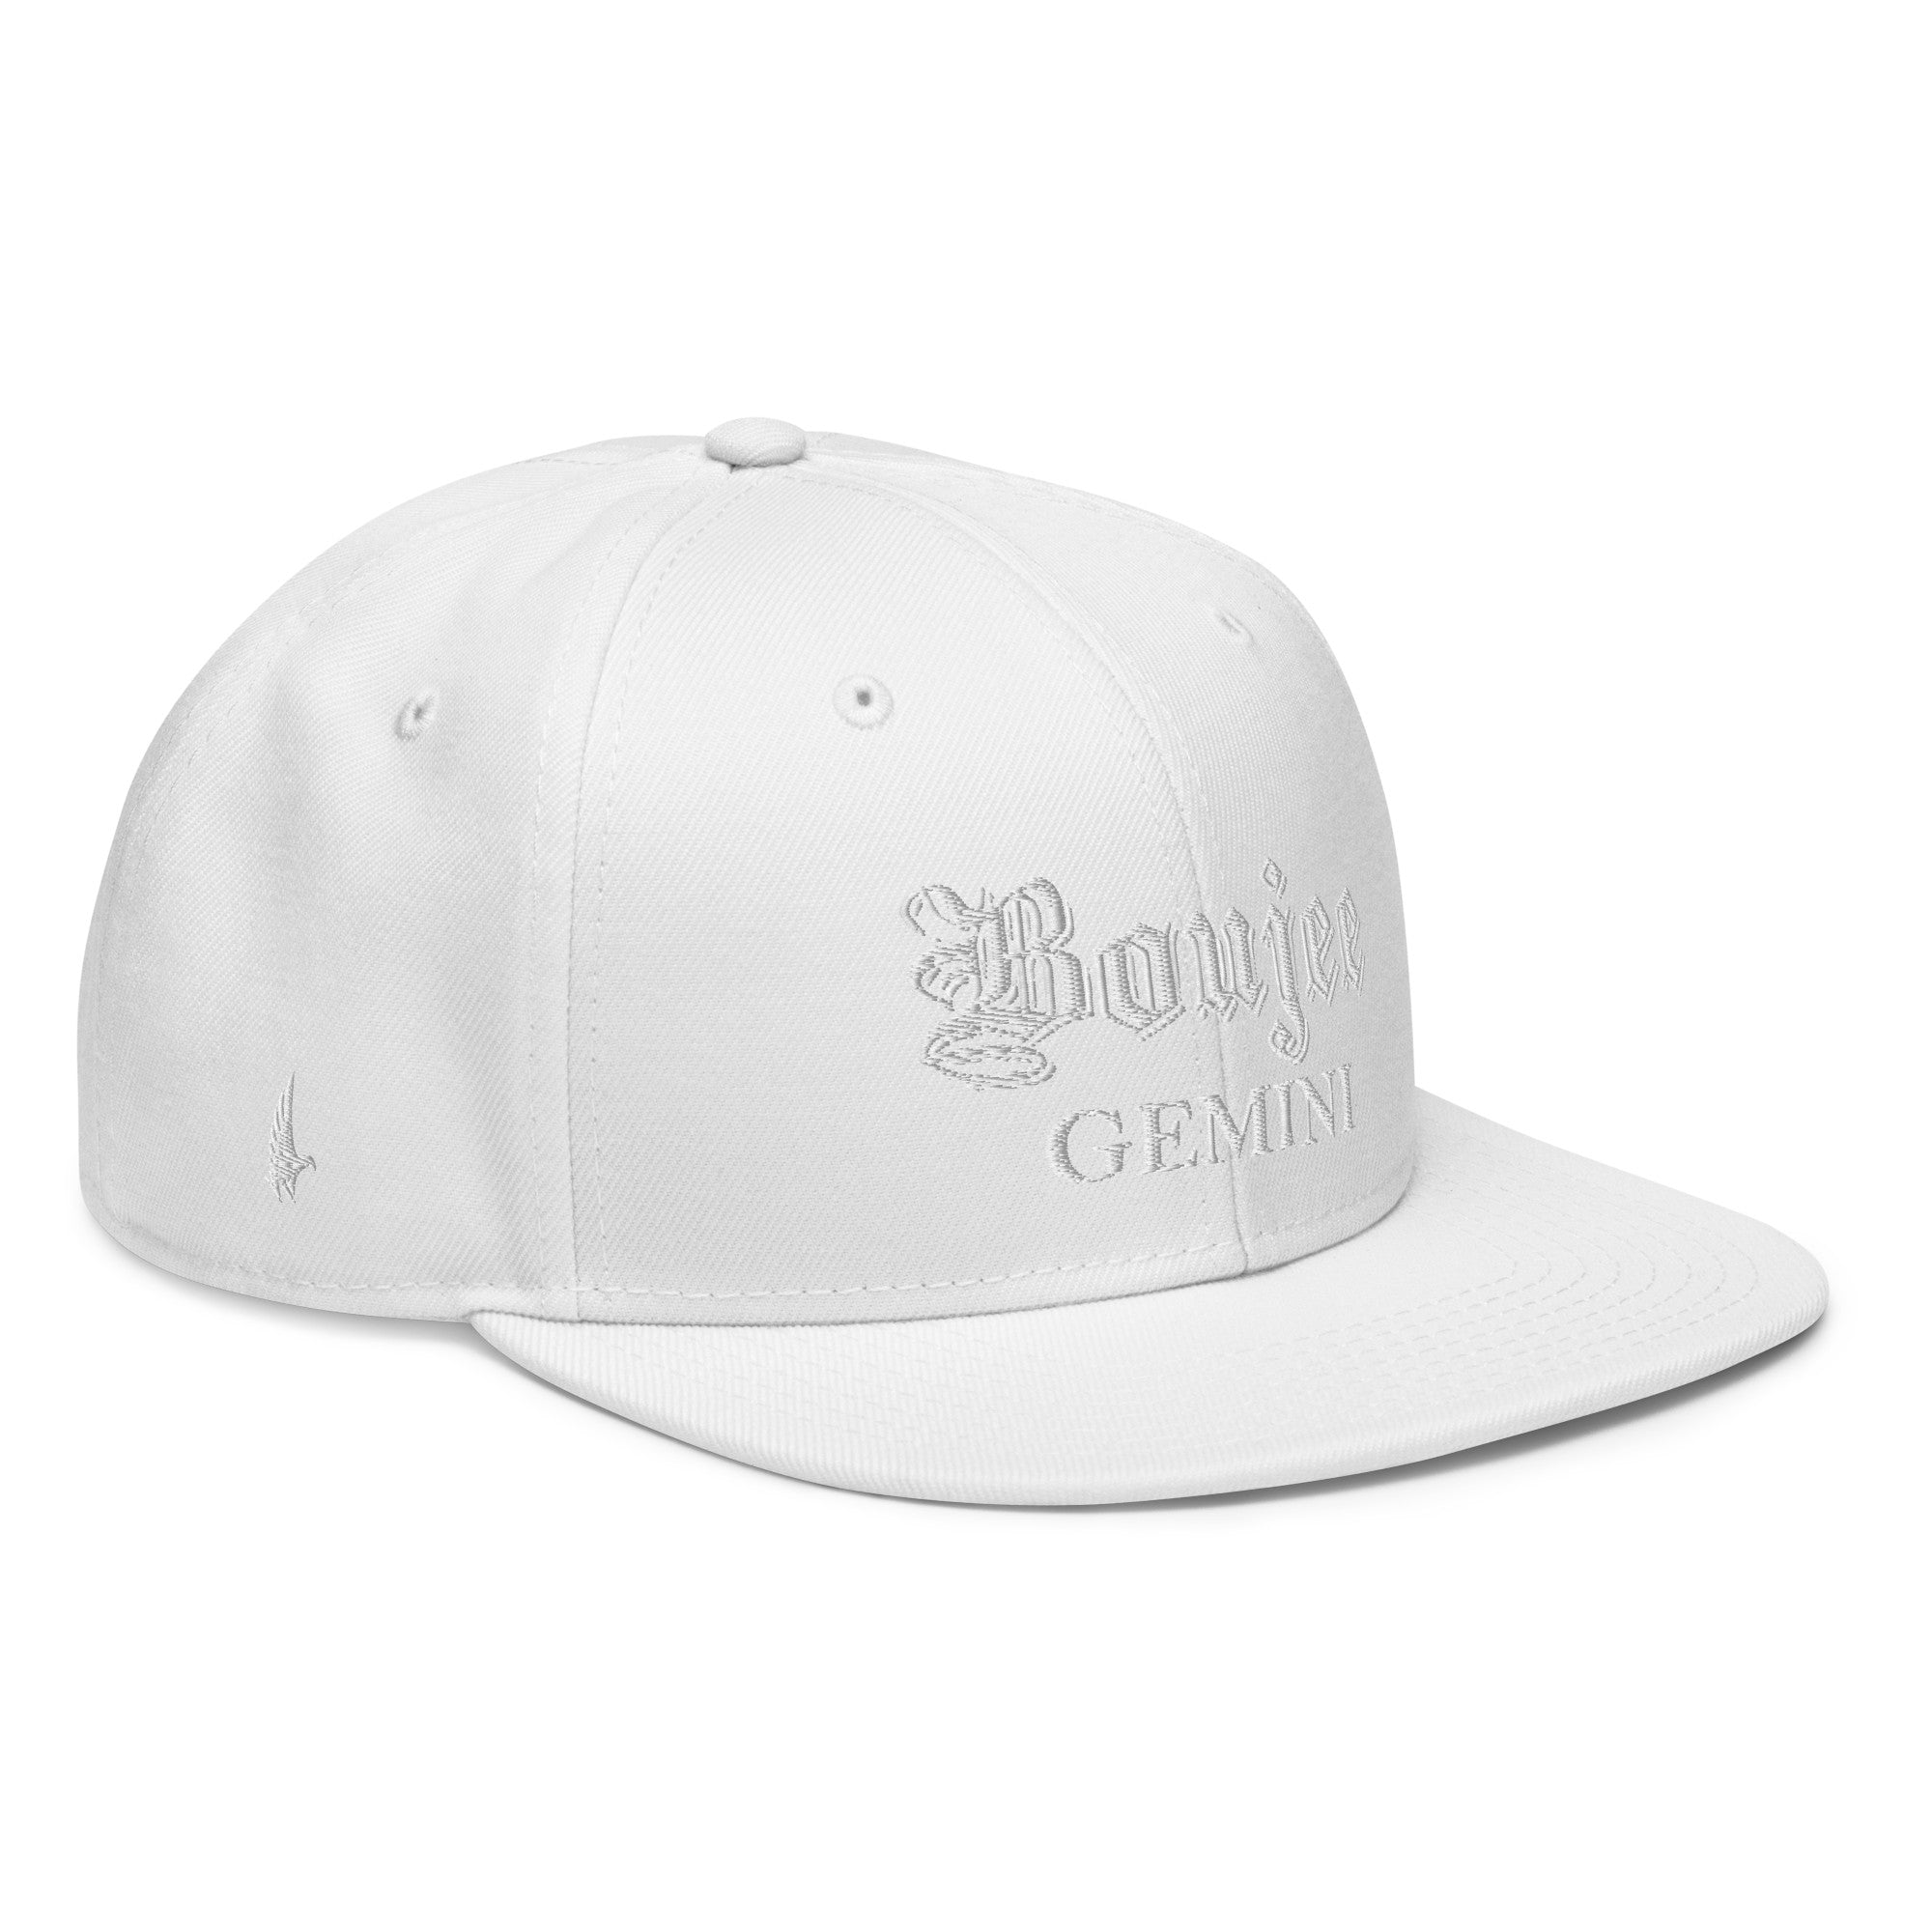 Boujee Gemini Snapback Hat - White - Loyalty Vibes